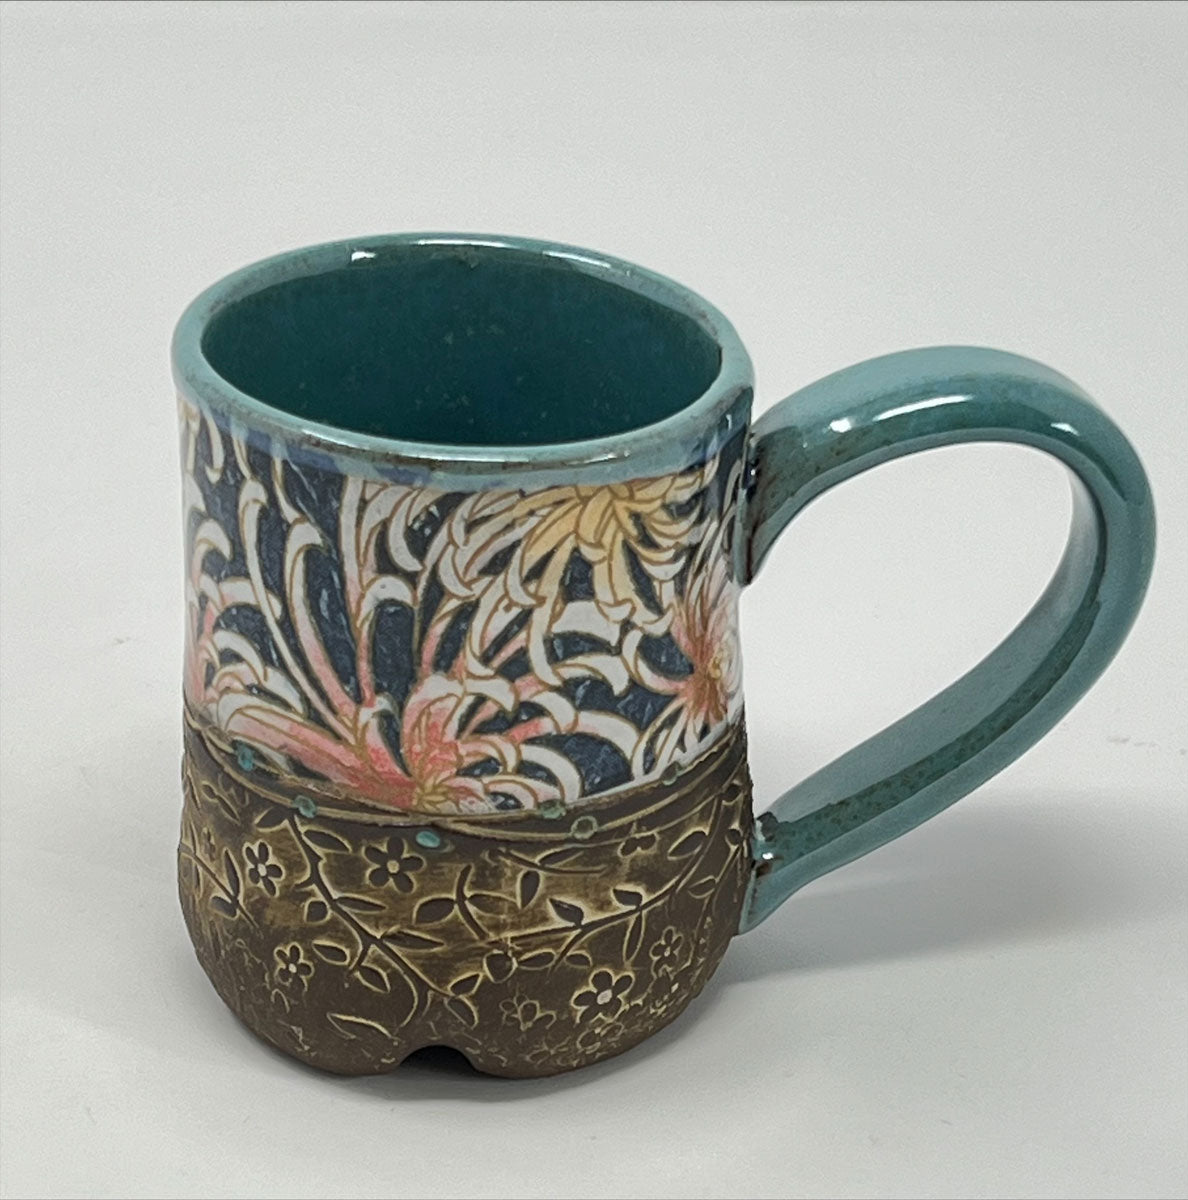 232. Small Chrysanthemum Mug